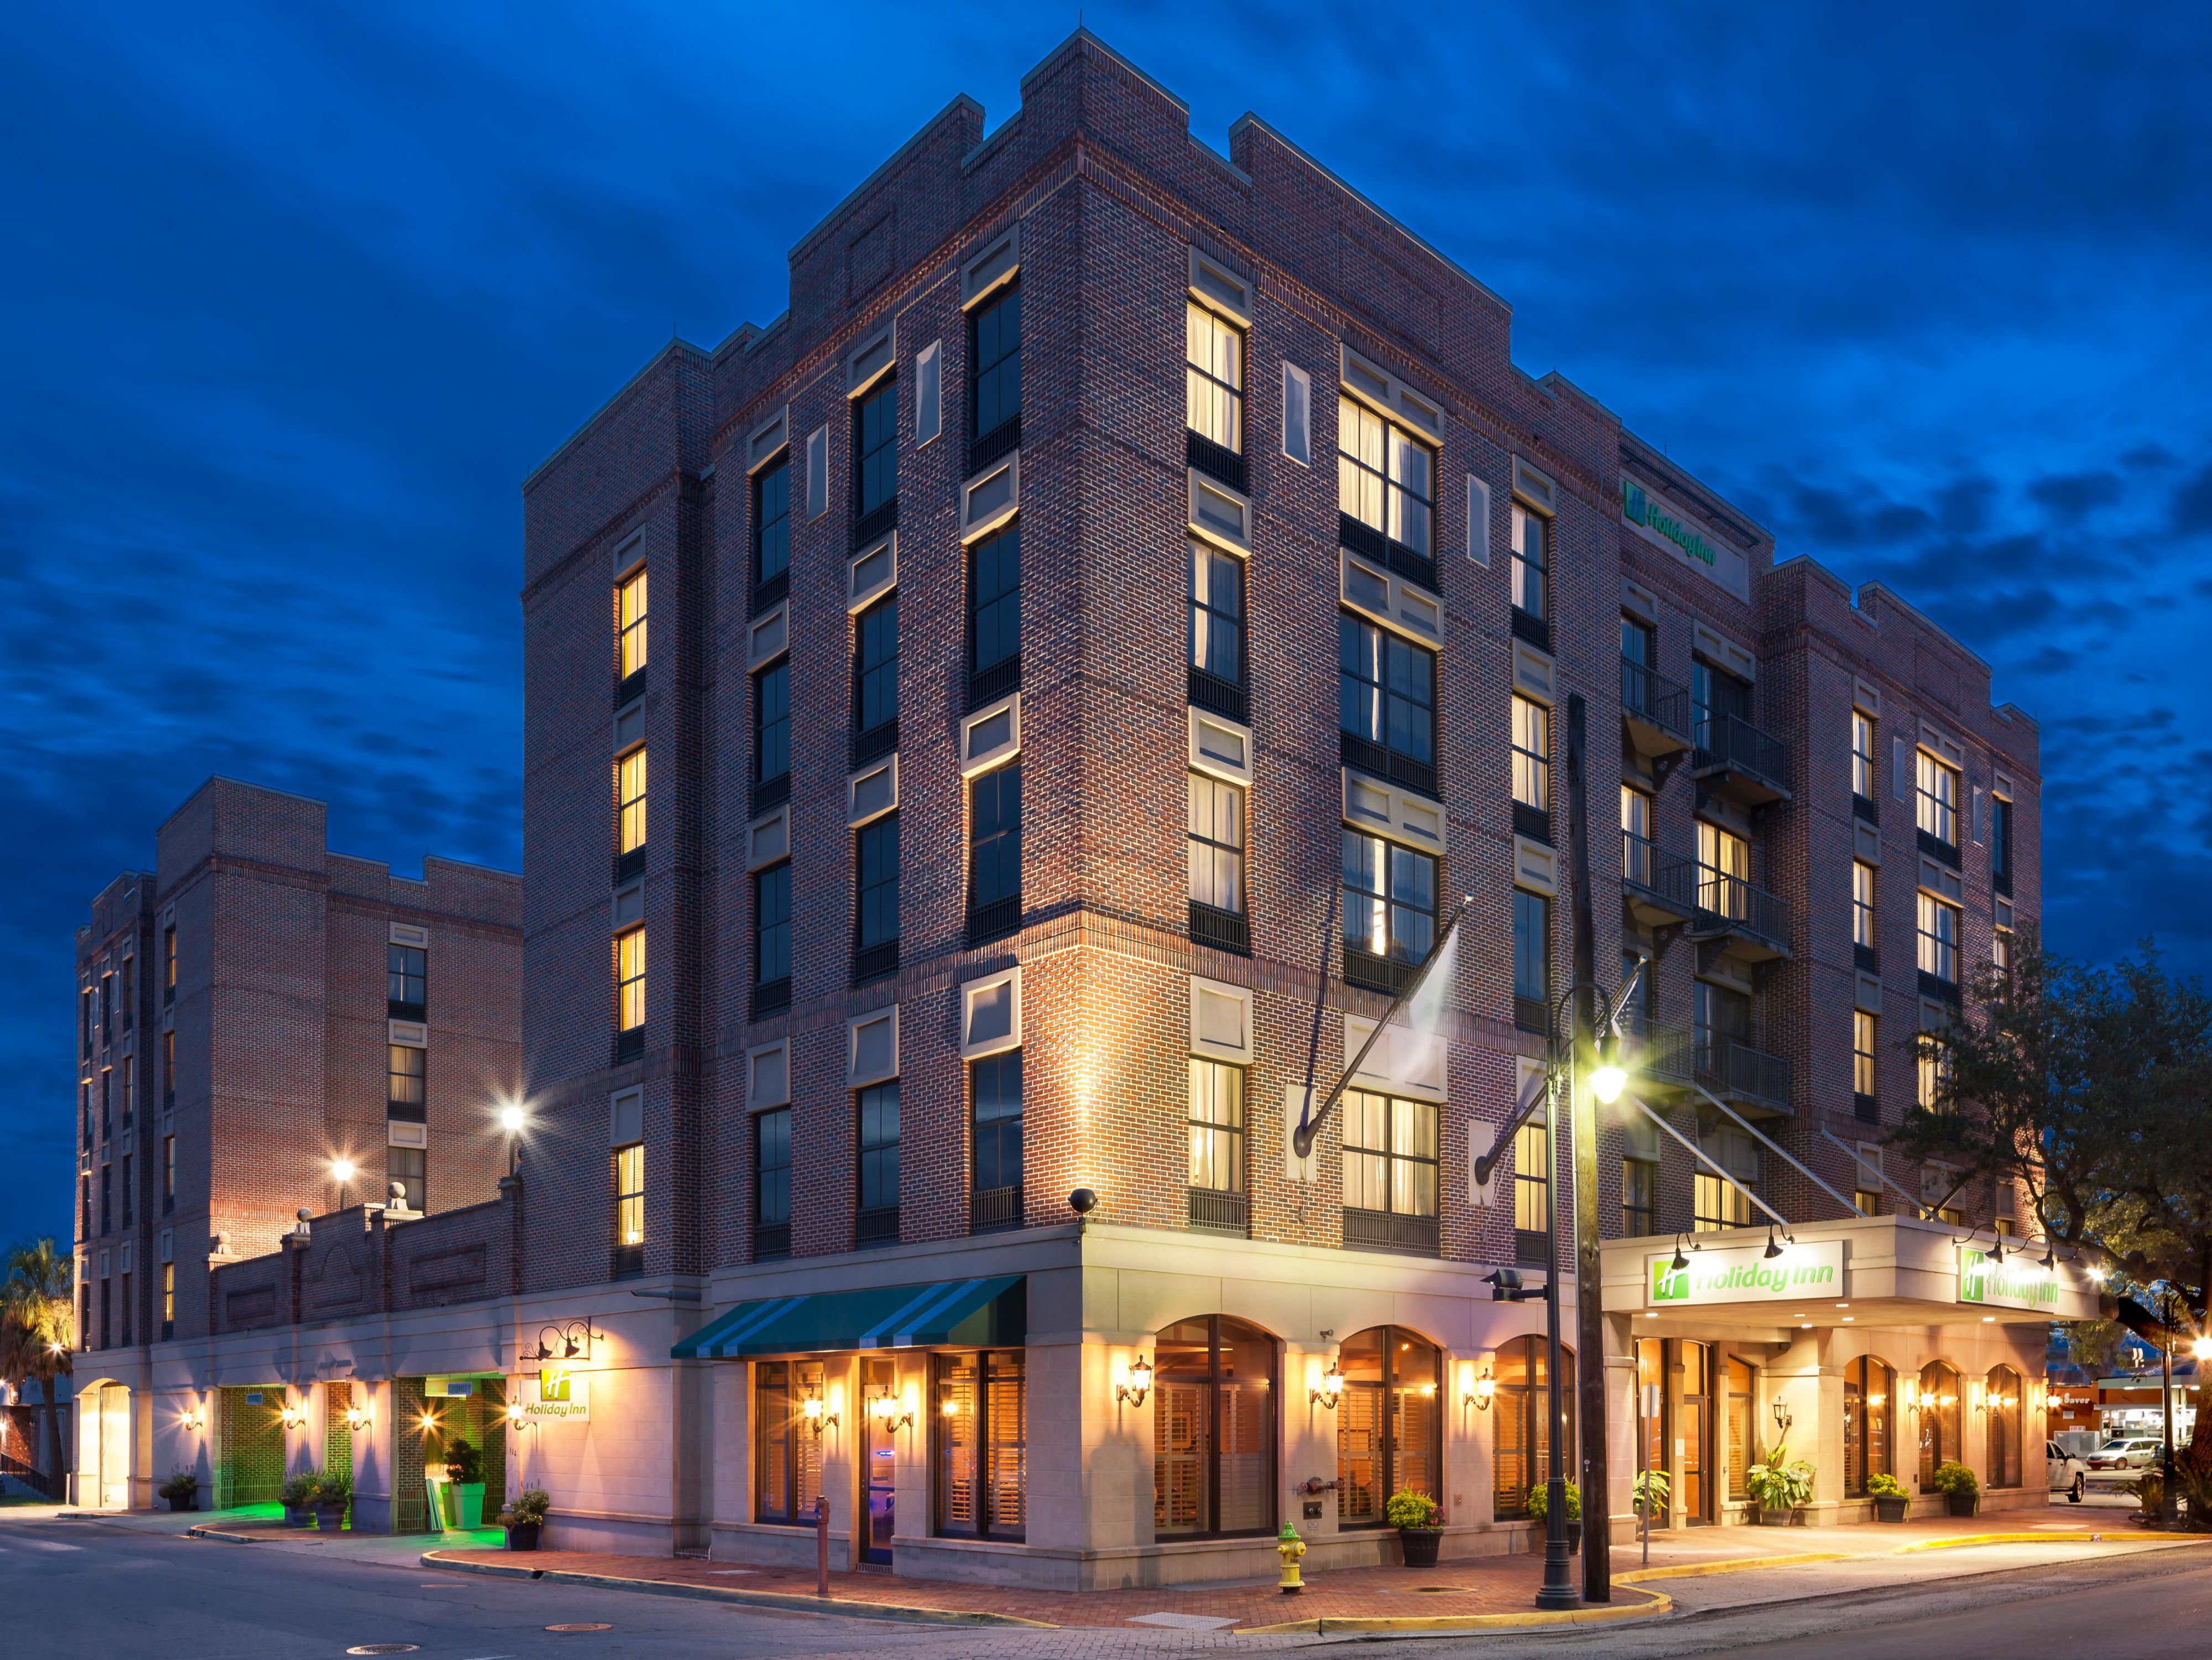 Hotels Downtown Savannah, GA | Holiday Inn Savannah Historic District